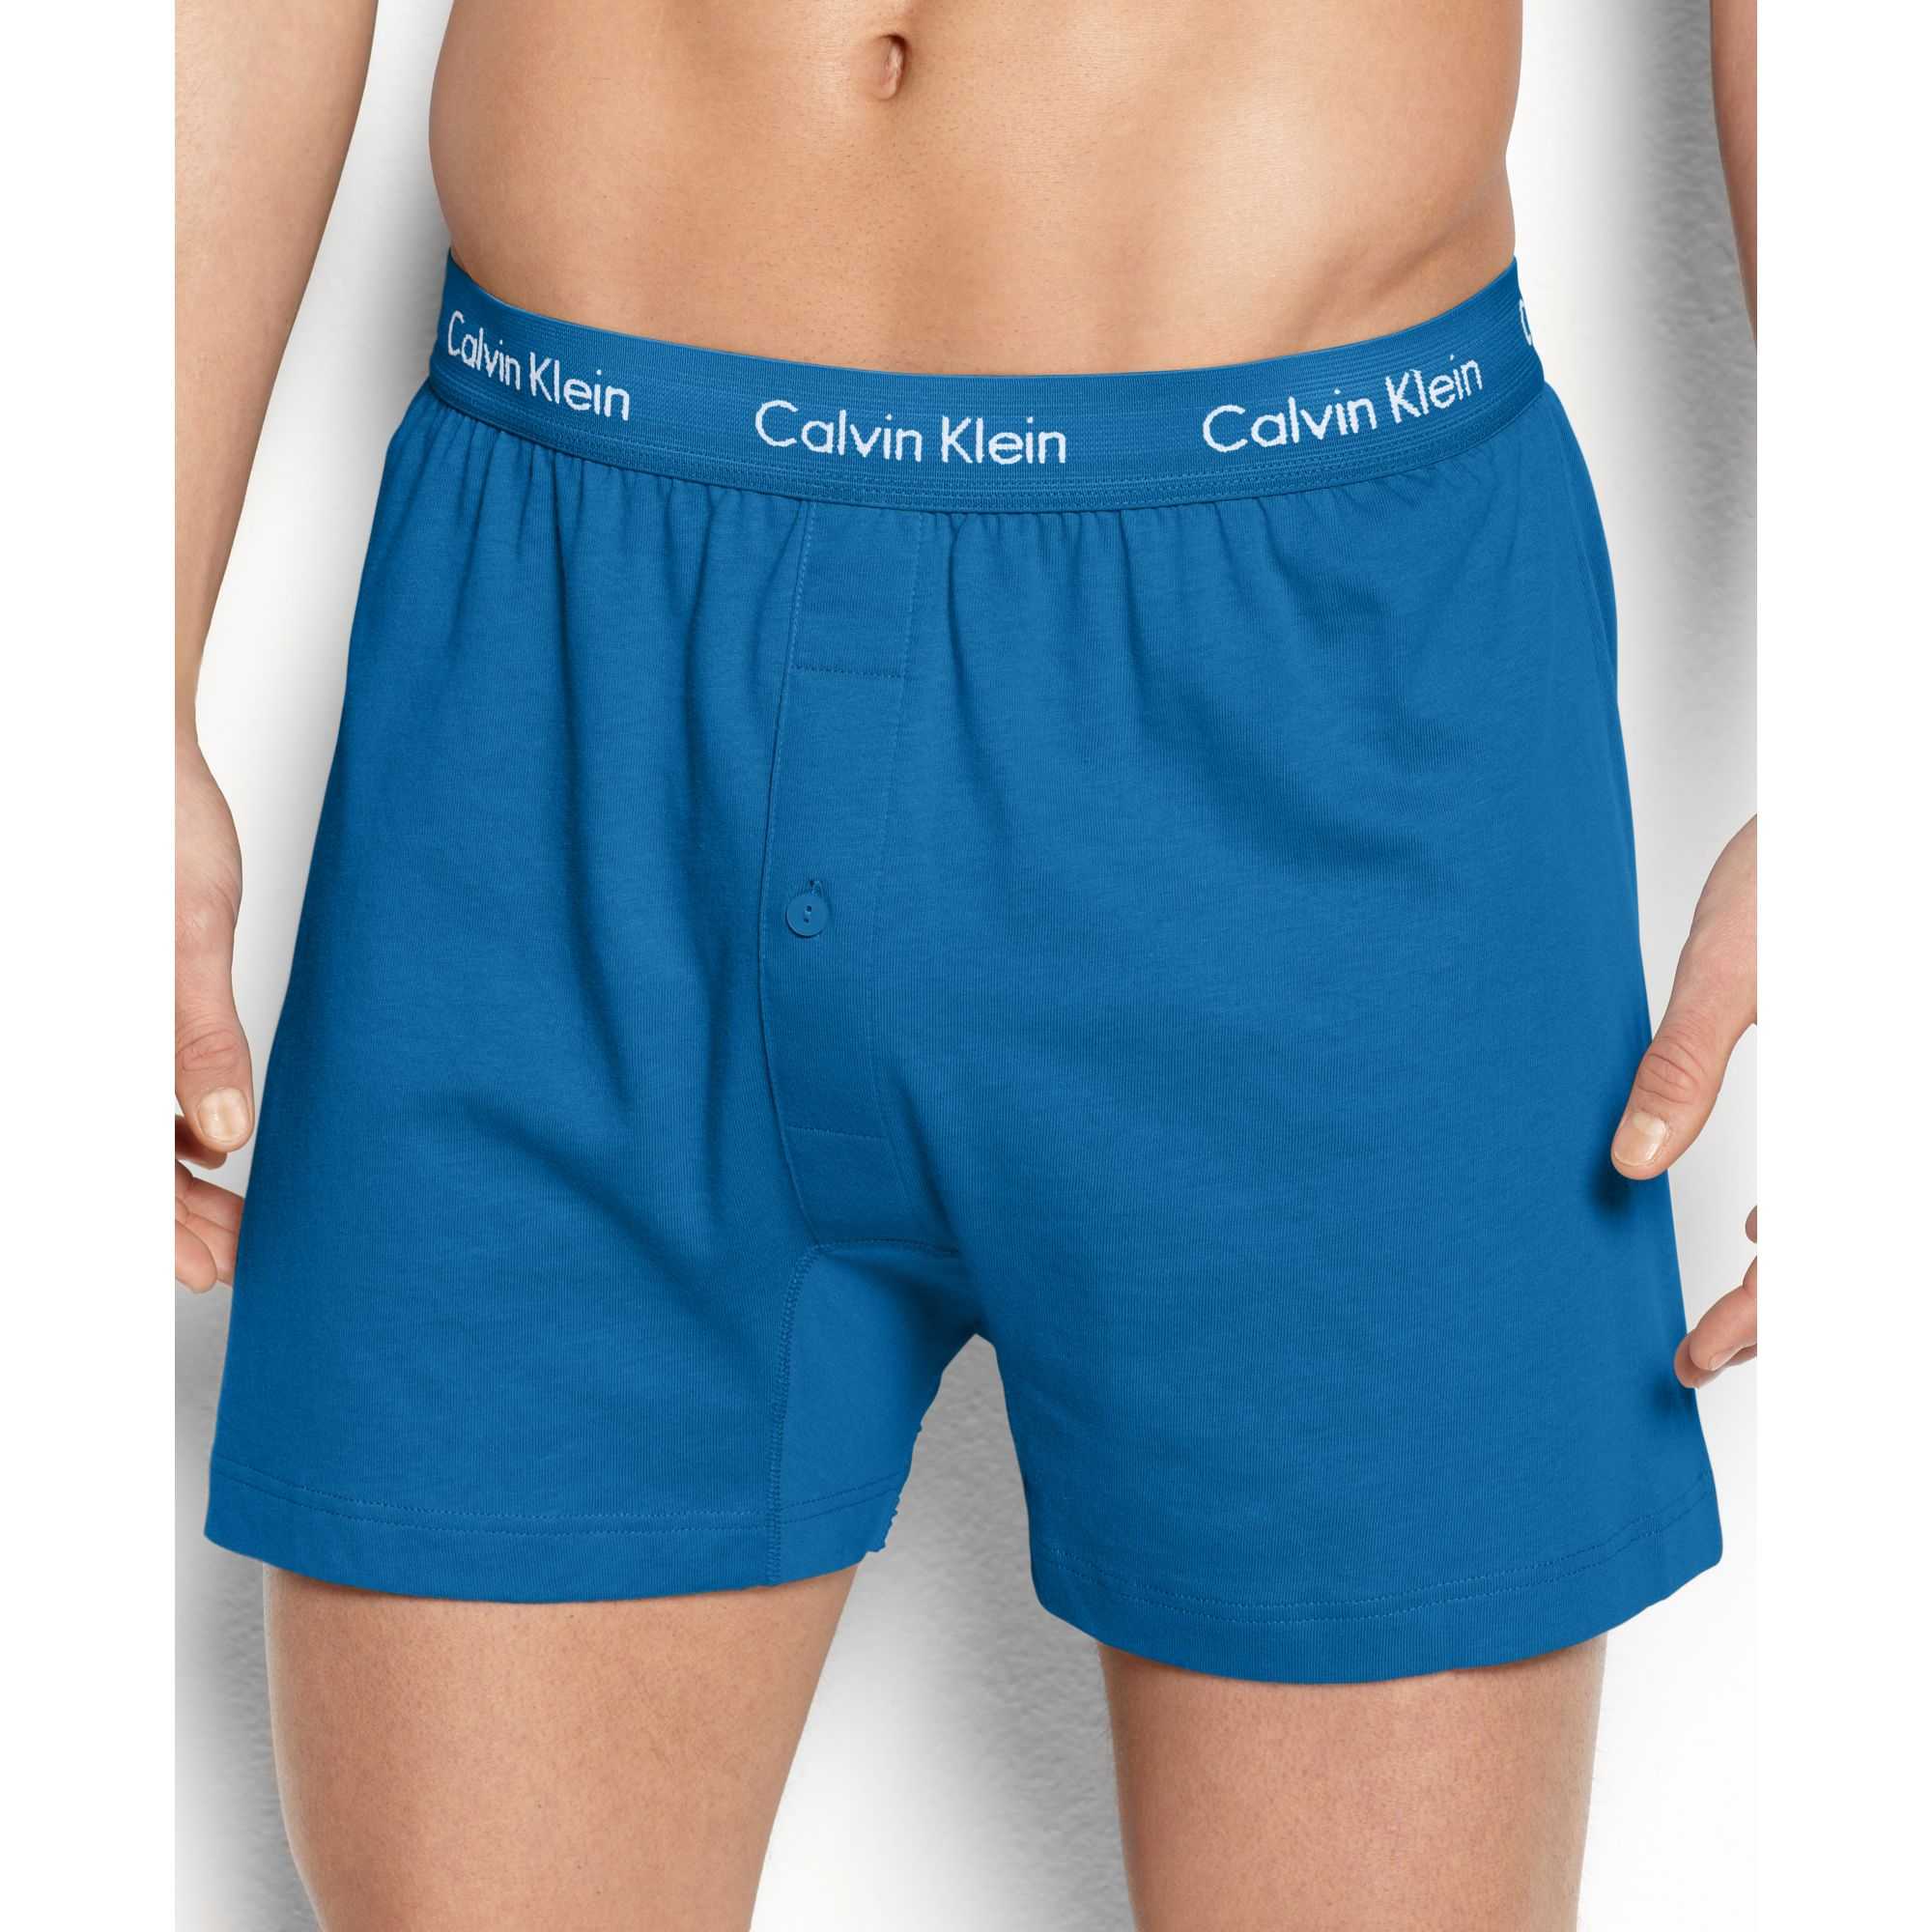 Calvin Klein Celebrity Basic Knit Boxer 3 Pack in Blue for Men - Lyst